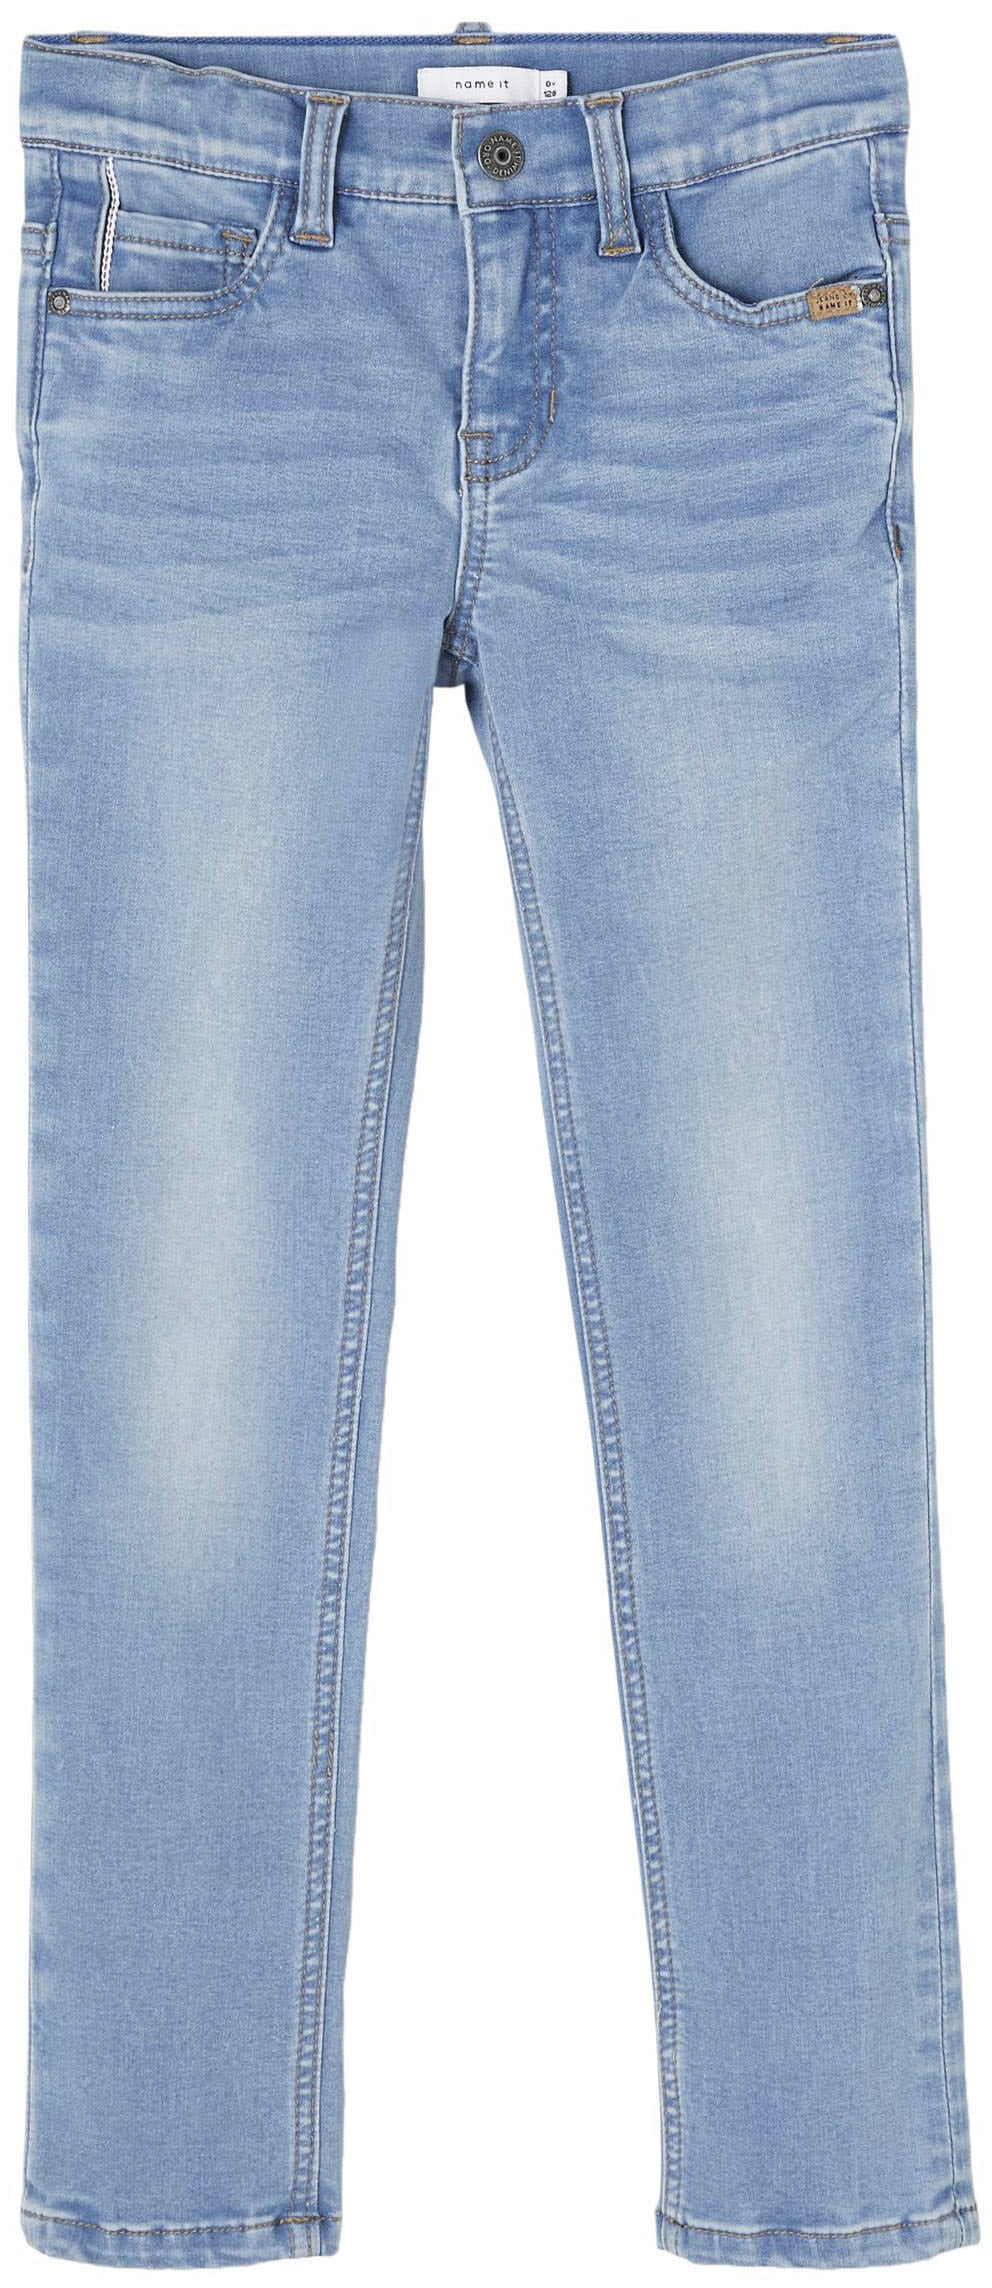 Name kaufen Stretch-Jeans OTTO It bei